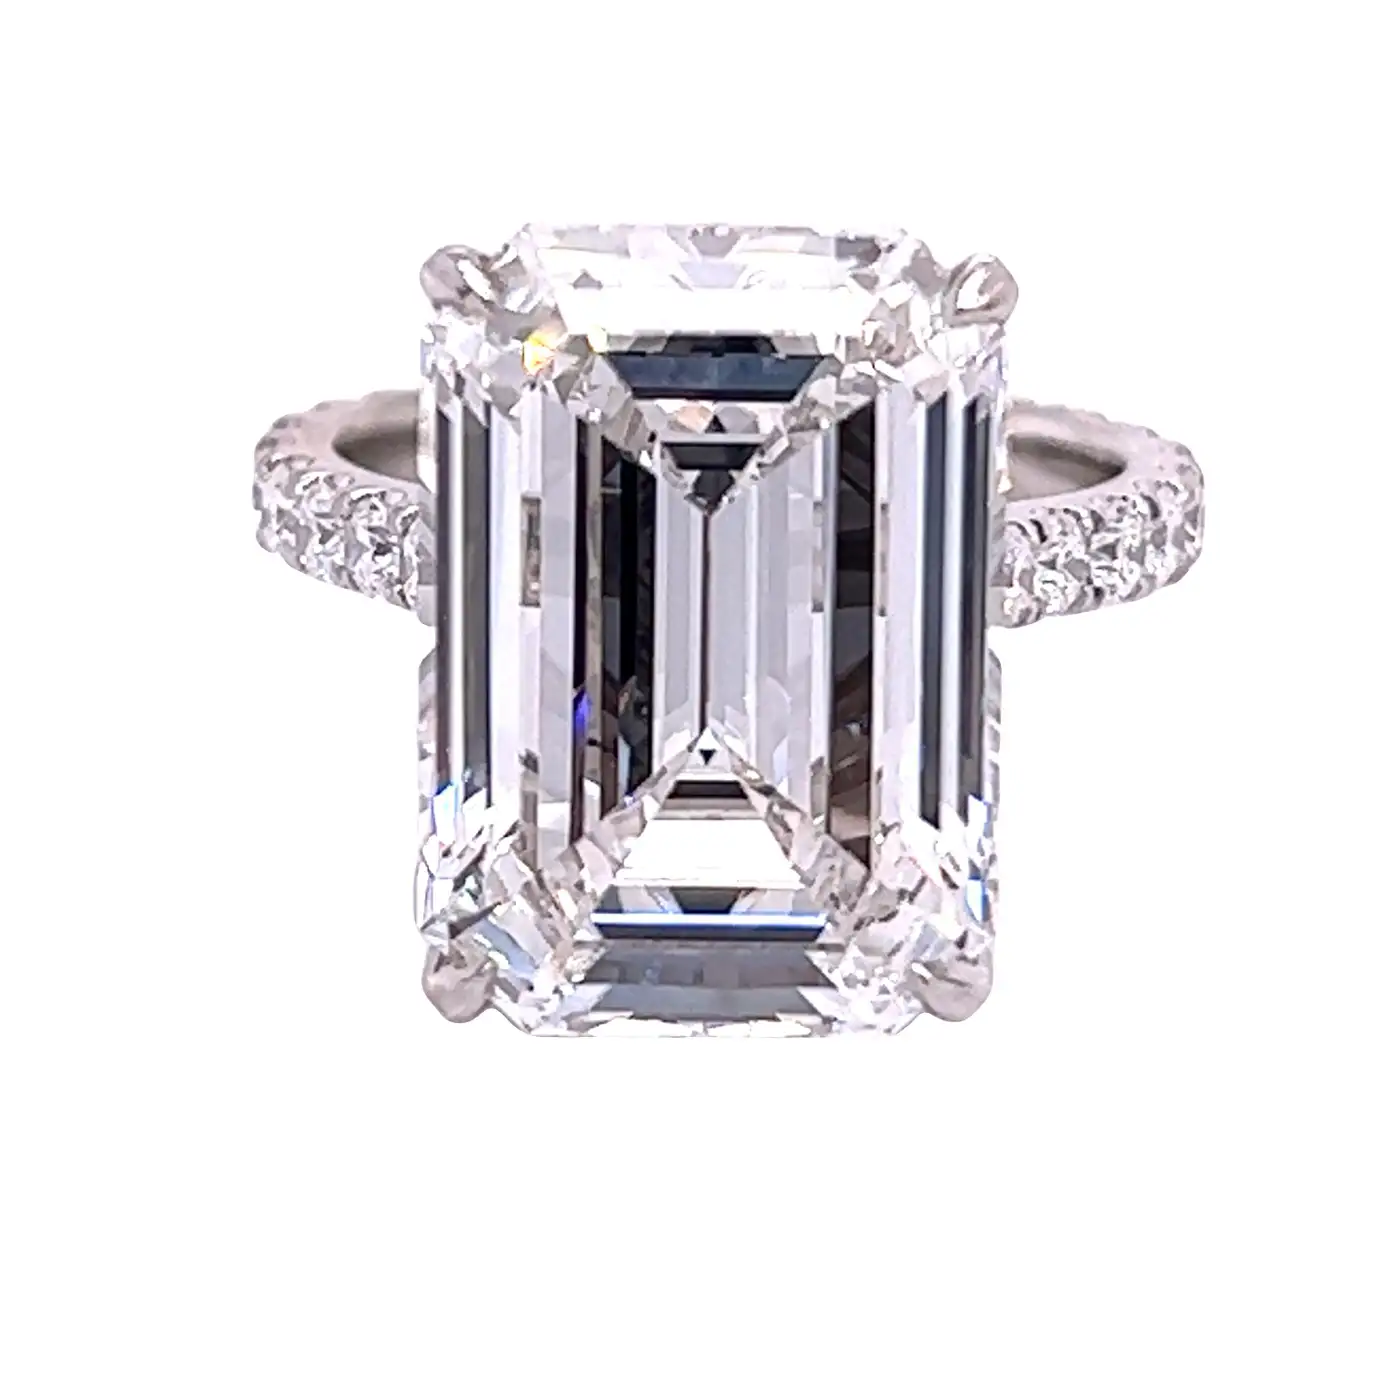 David-Rosenberg-10.41-Carat-Emerald-Cut-F-VVS2-GIA-Diamond-Engagement-Ring-5.webp